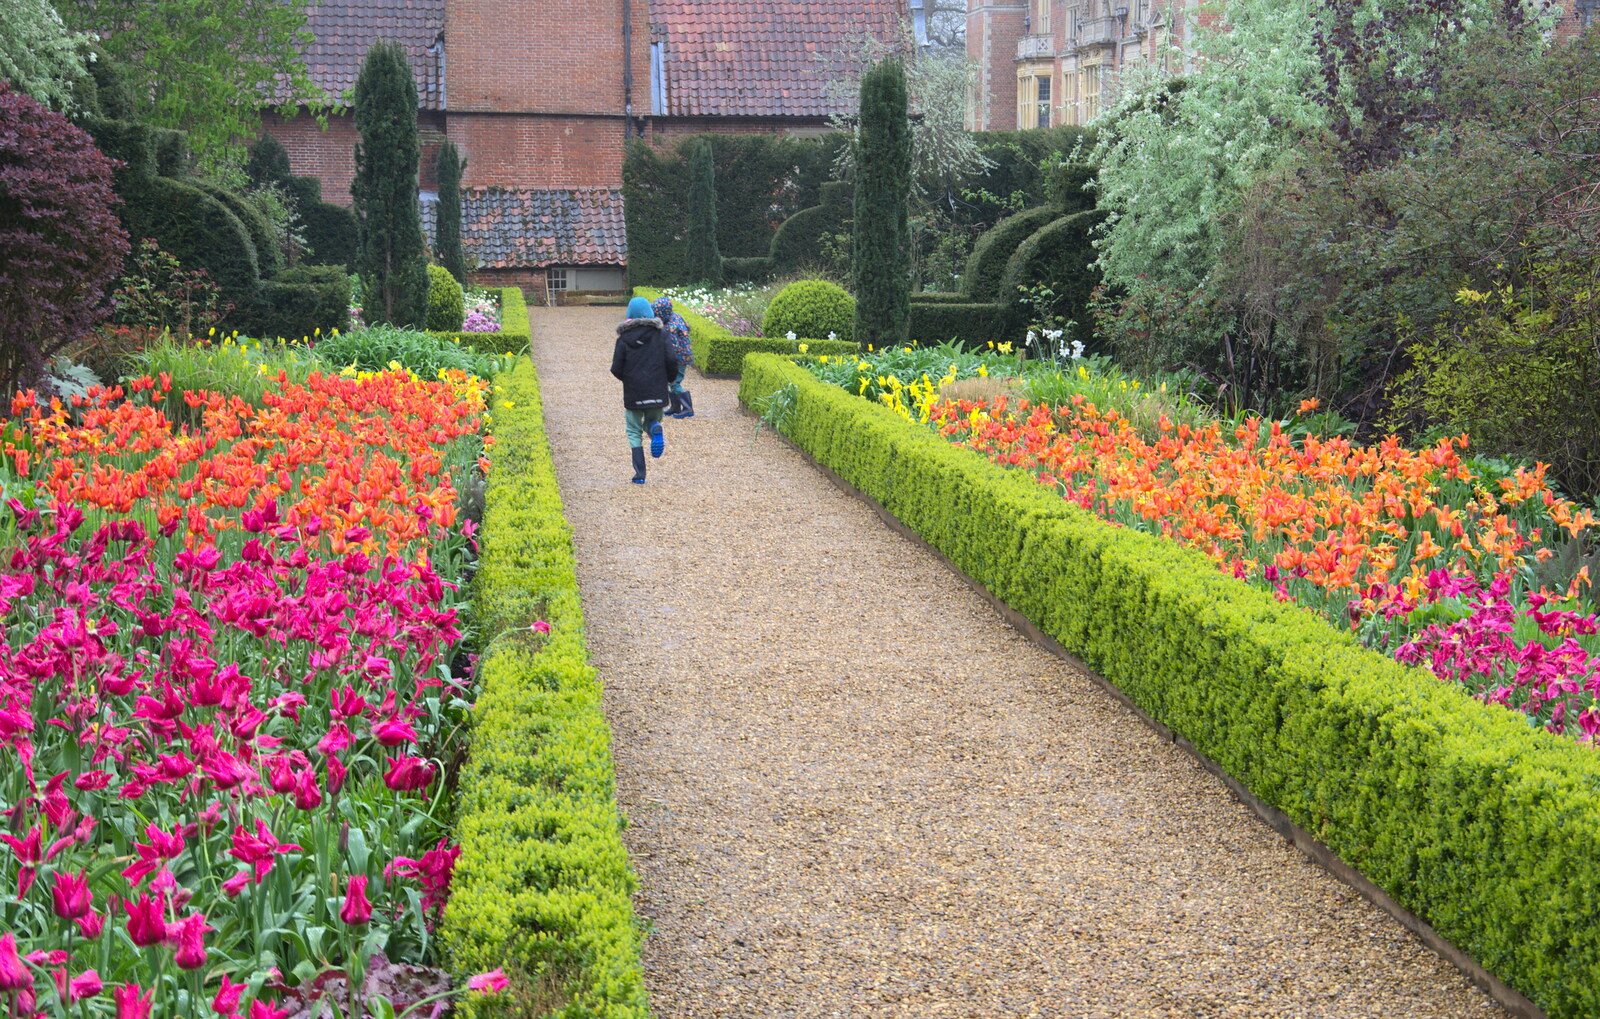 The boys run through the tulip garden from A Trip to Blickling Hall, Aylsham, Norfolk - 29th April 2018